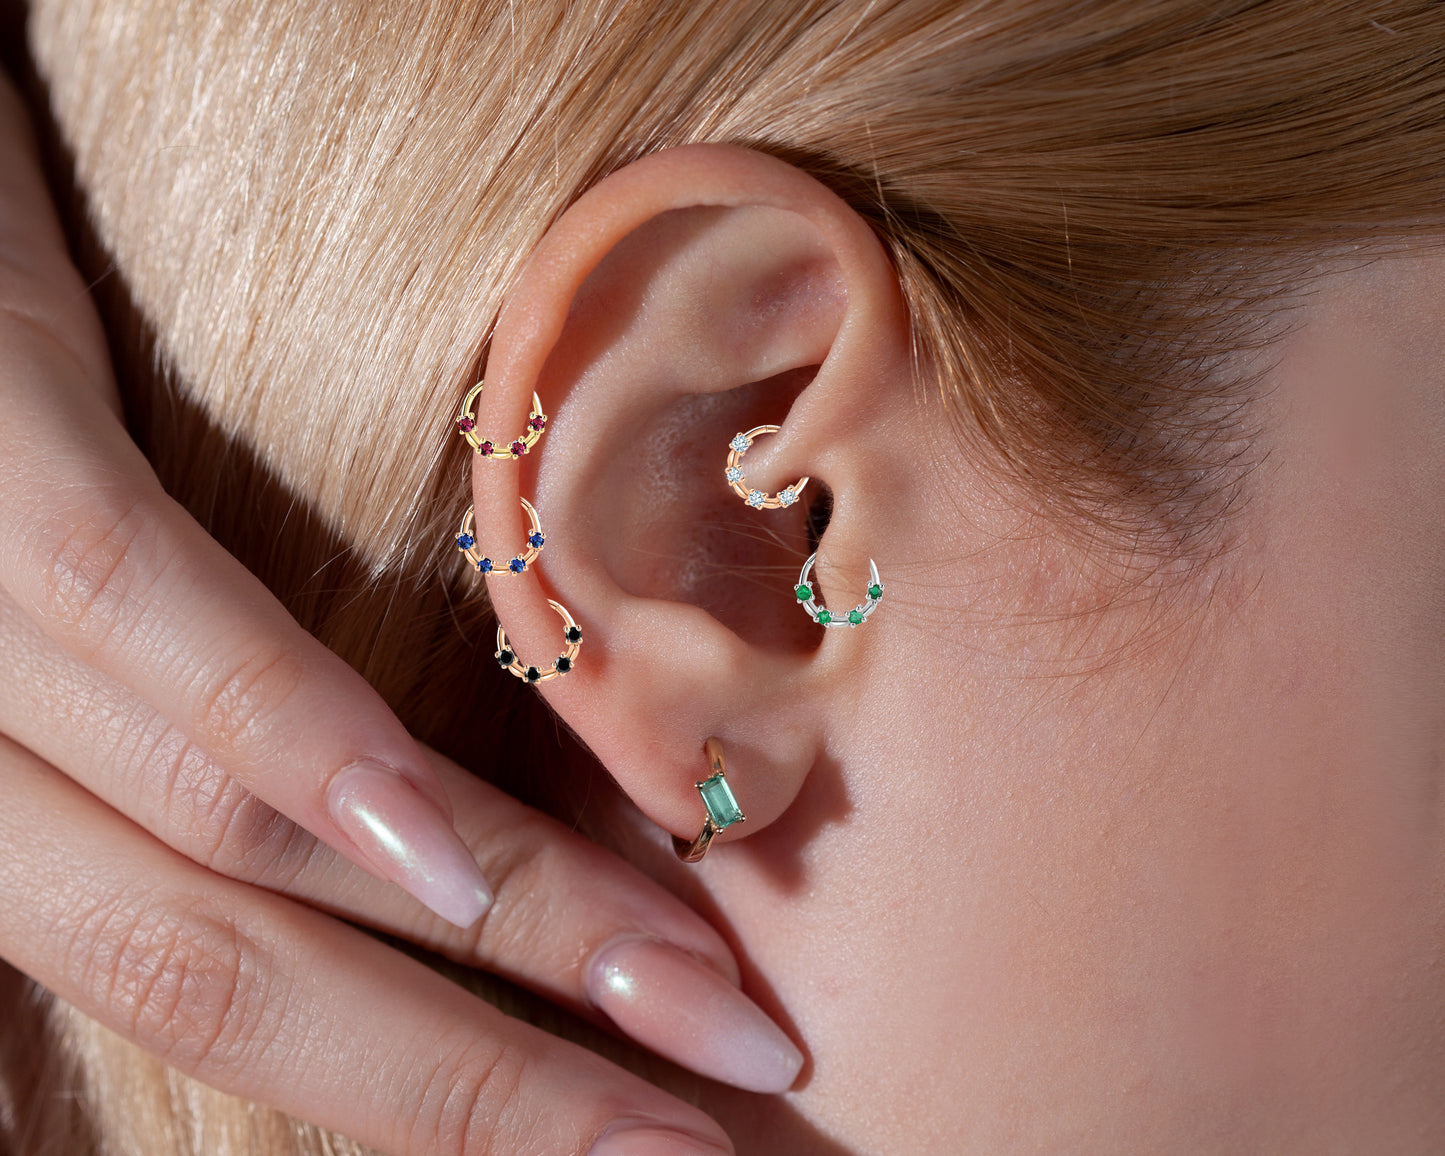 Cartilage Hoop Four Sapphire Clicker Piercing Single Earring 14K Gold,18G(1.00)